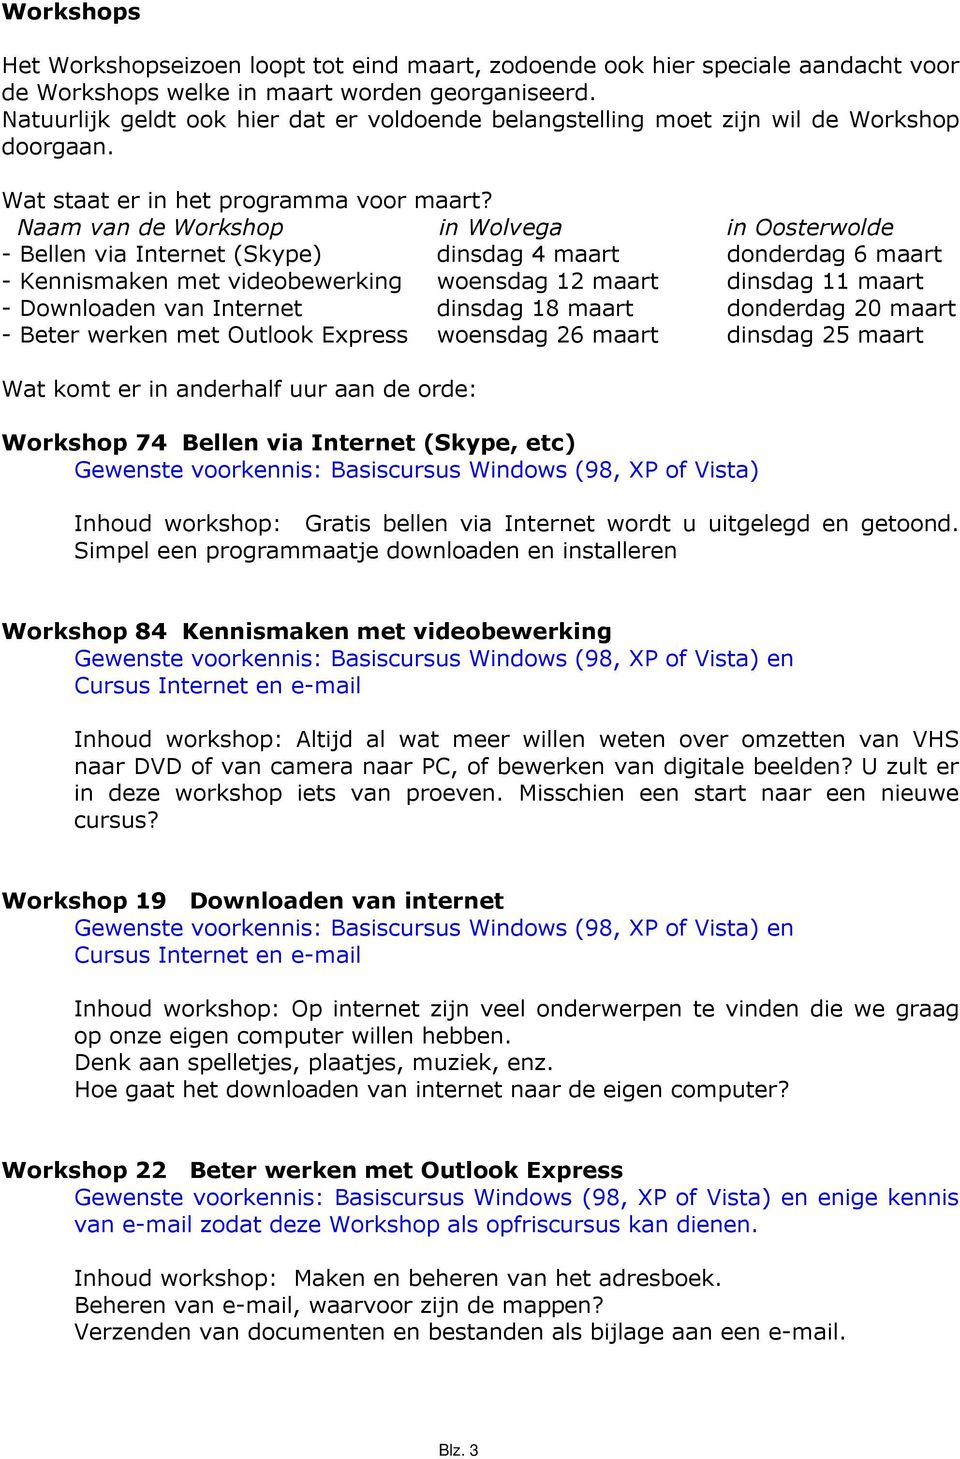 Naam van de Workshop in Wolvega in Oosterwolde - Bellen via Internet (Skype) dinsdag 4 maart donderdag 6 maart - Kennismaken met videobewerking woensdag 12 maart dinsdag 11 maart - Downloaden van